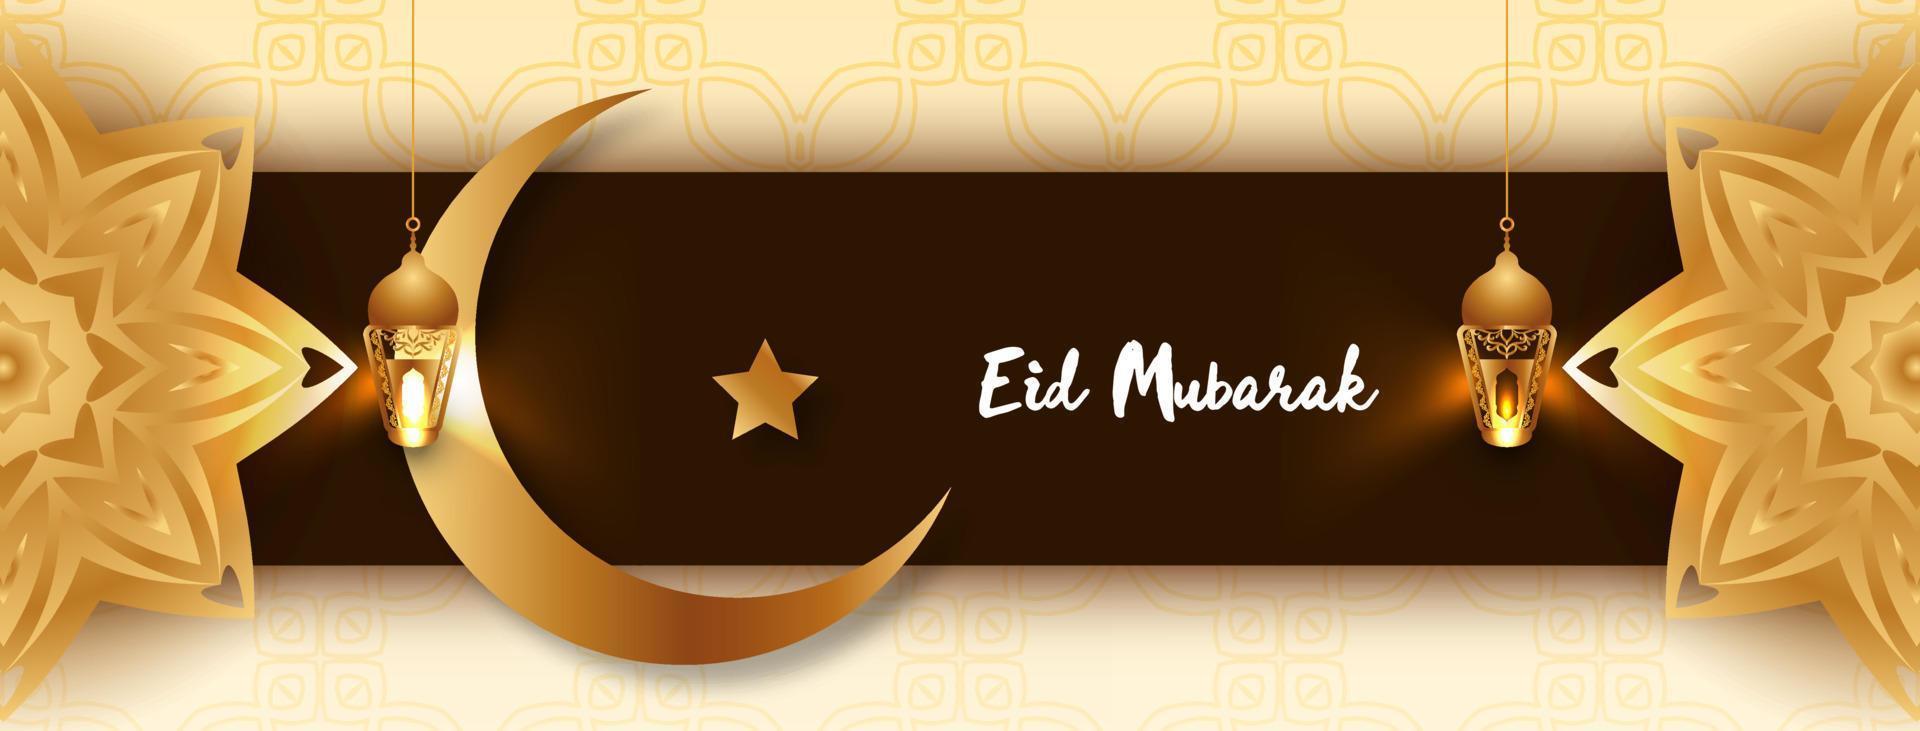 Eid Mubarak traditional festival islamic banner design vector